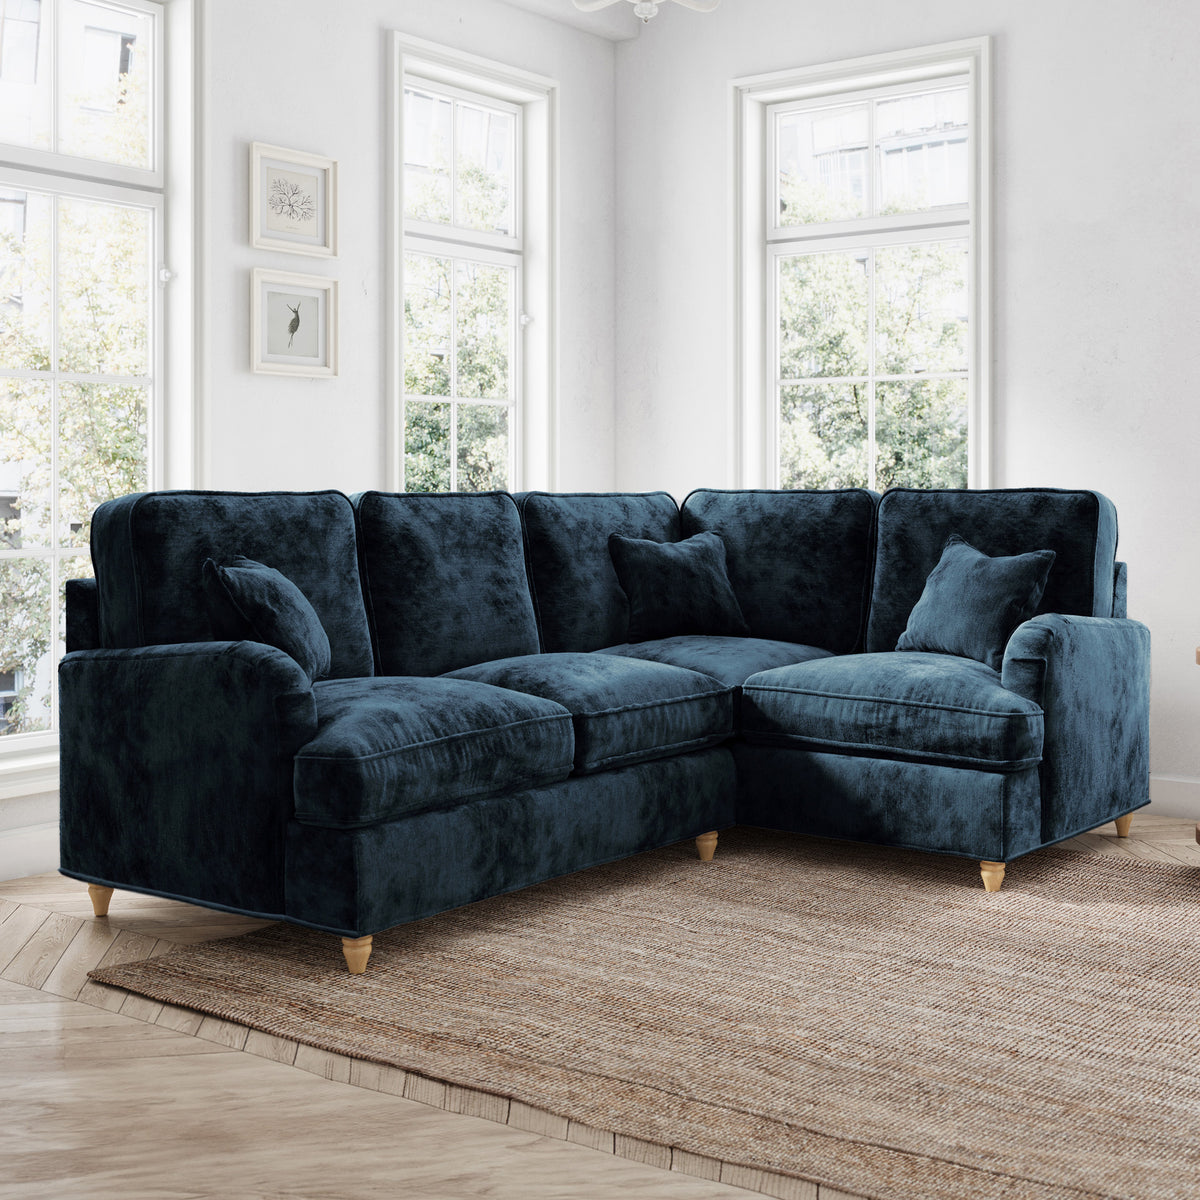 Arthur Navy RH Corner Sofa from Roseland furniture